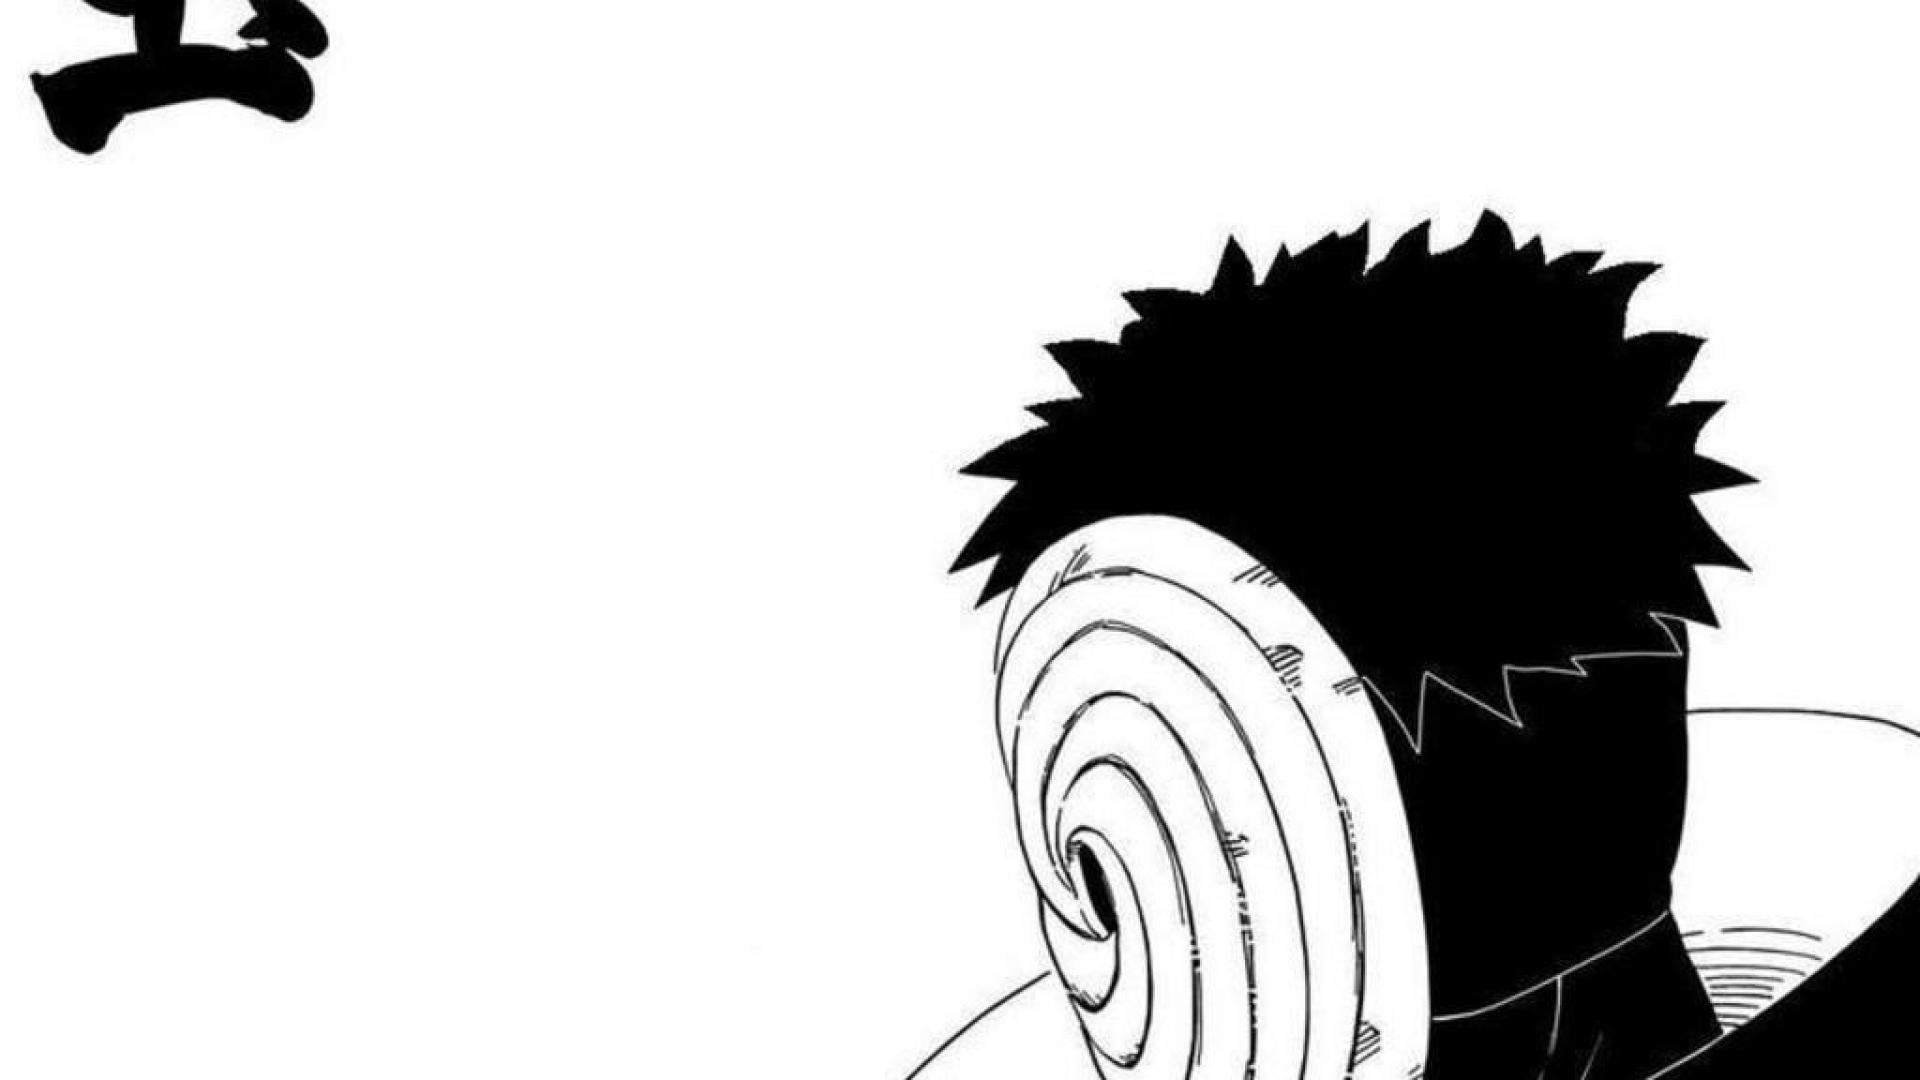 Naruto Shippuden Manga Wallpapers - Wallpaper Cave